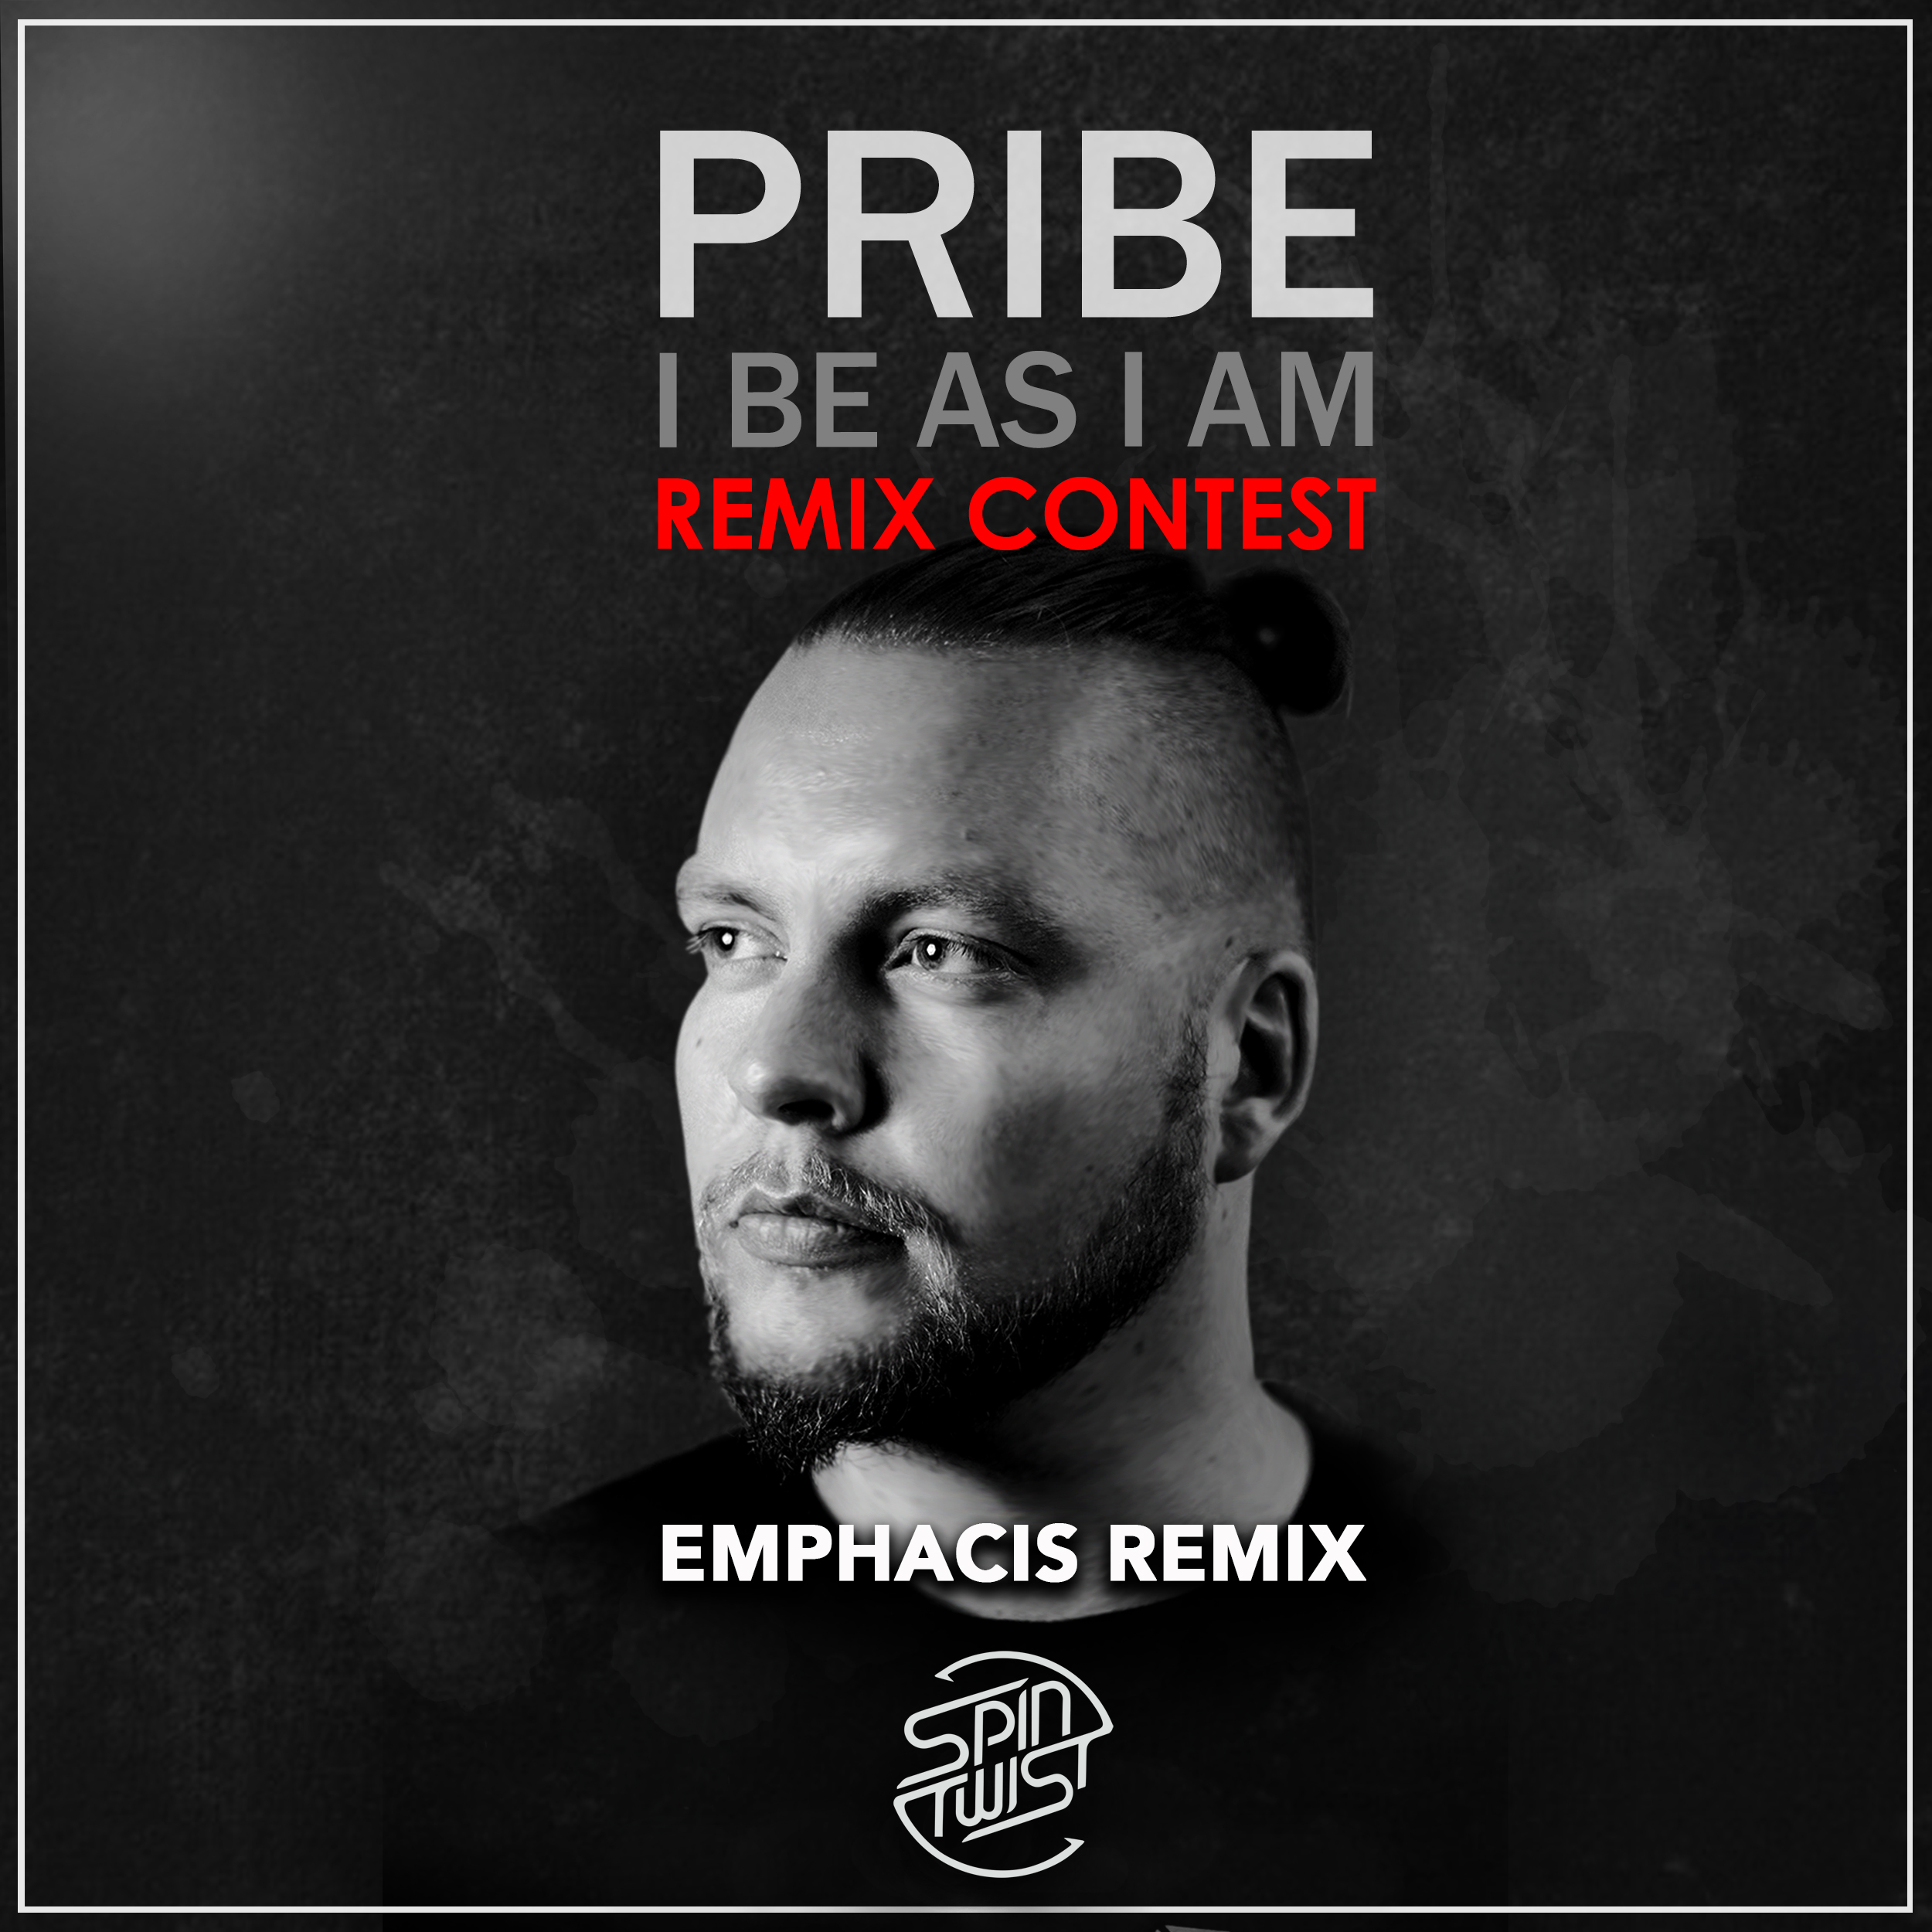 Pribe - I Be As I Am (Emphacis Remix)